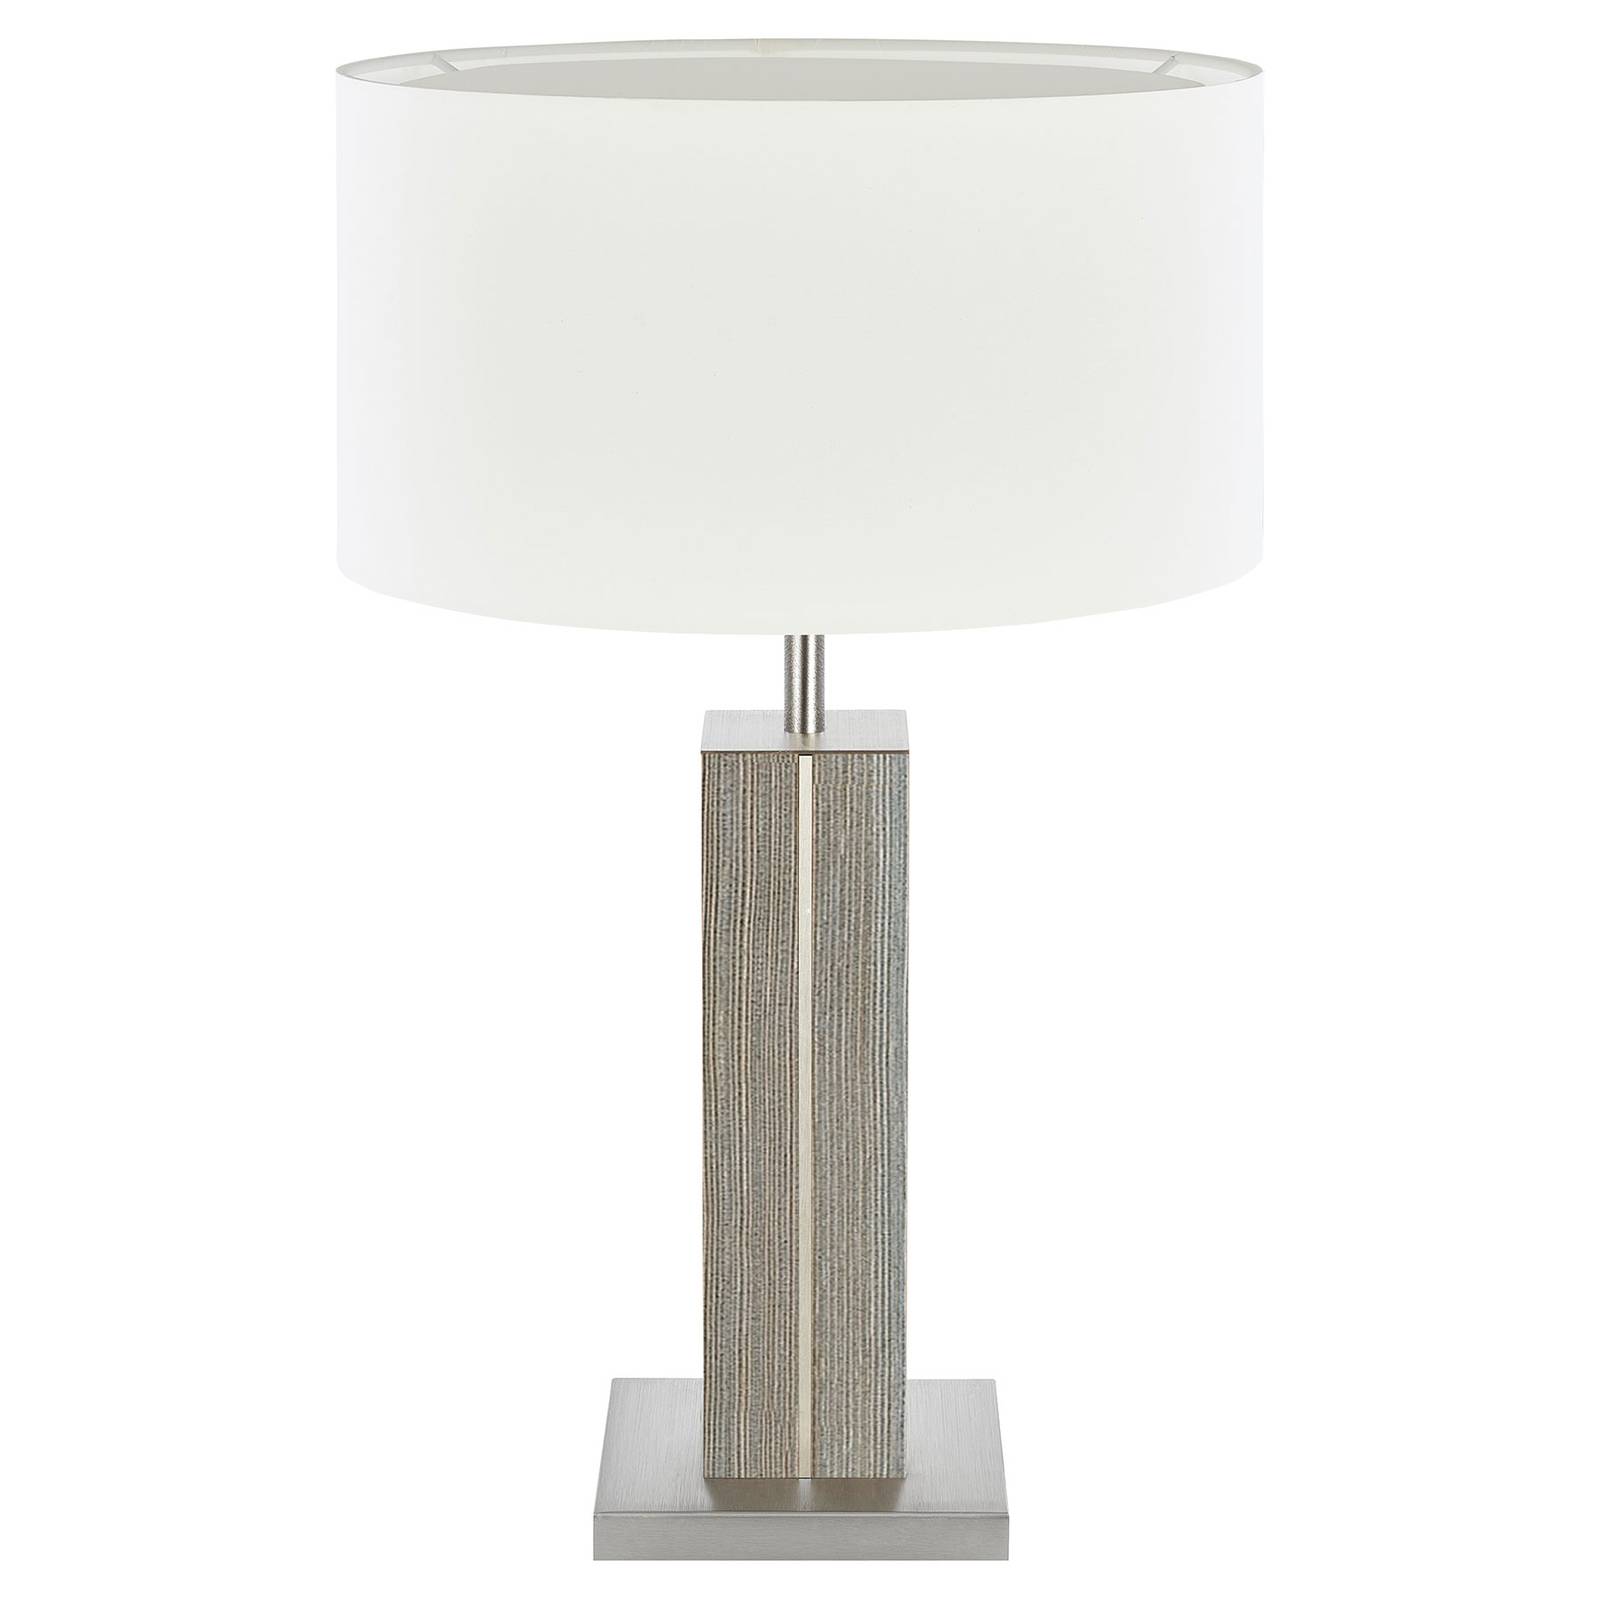 HerzBlut Dana tafellamp, spar, wit, 56 cm